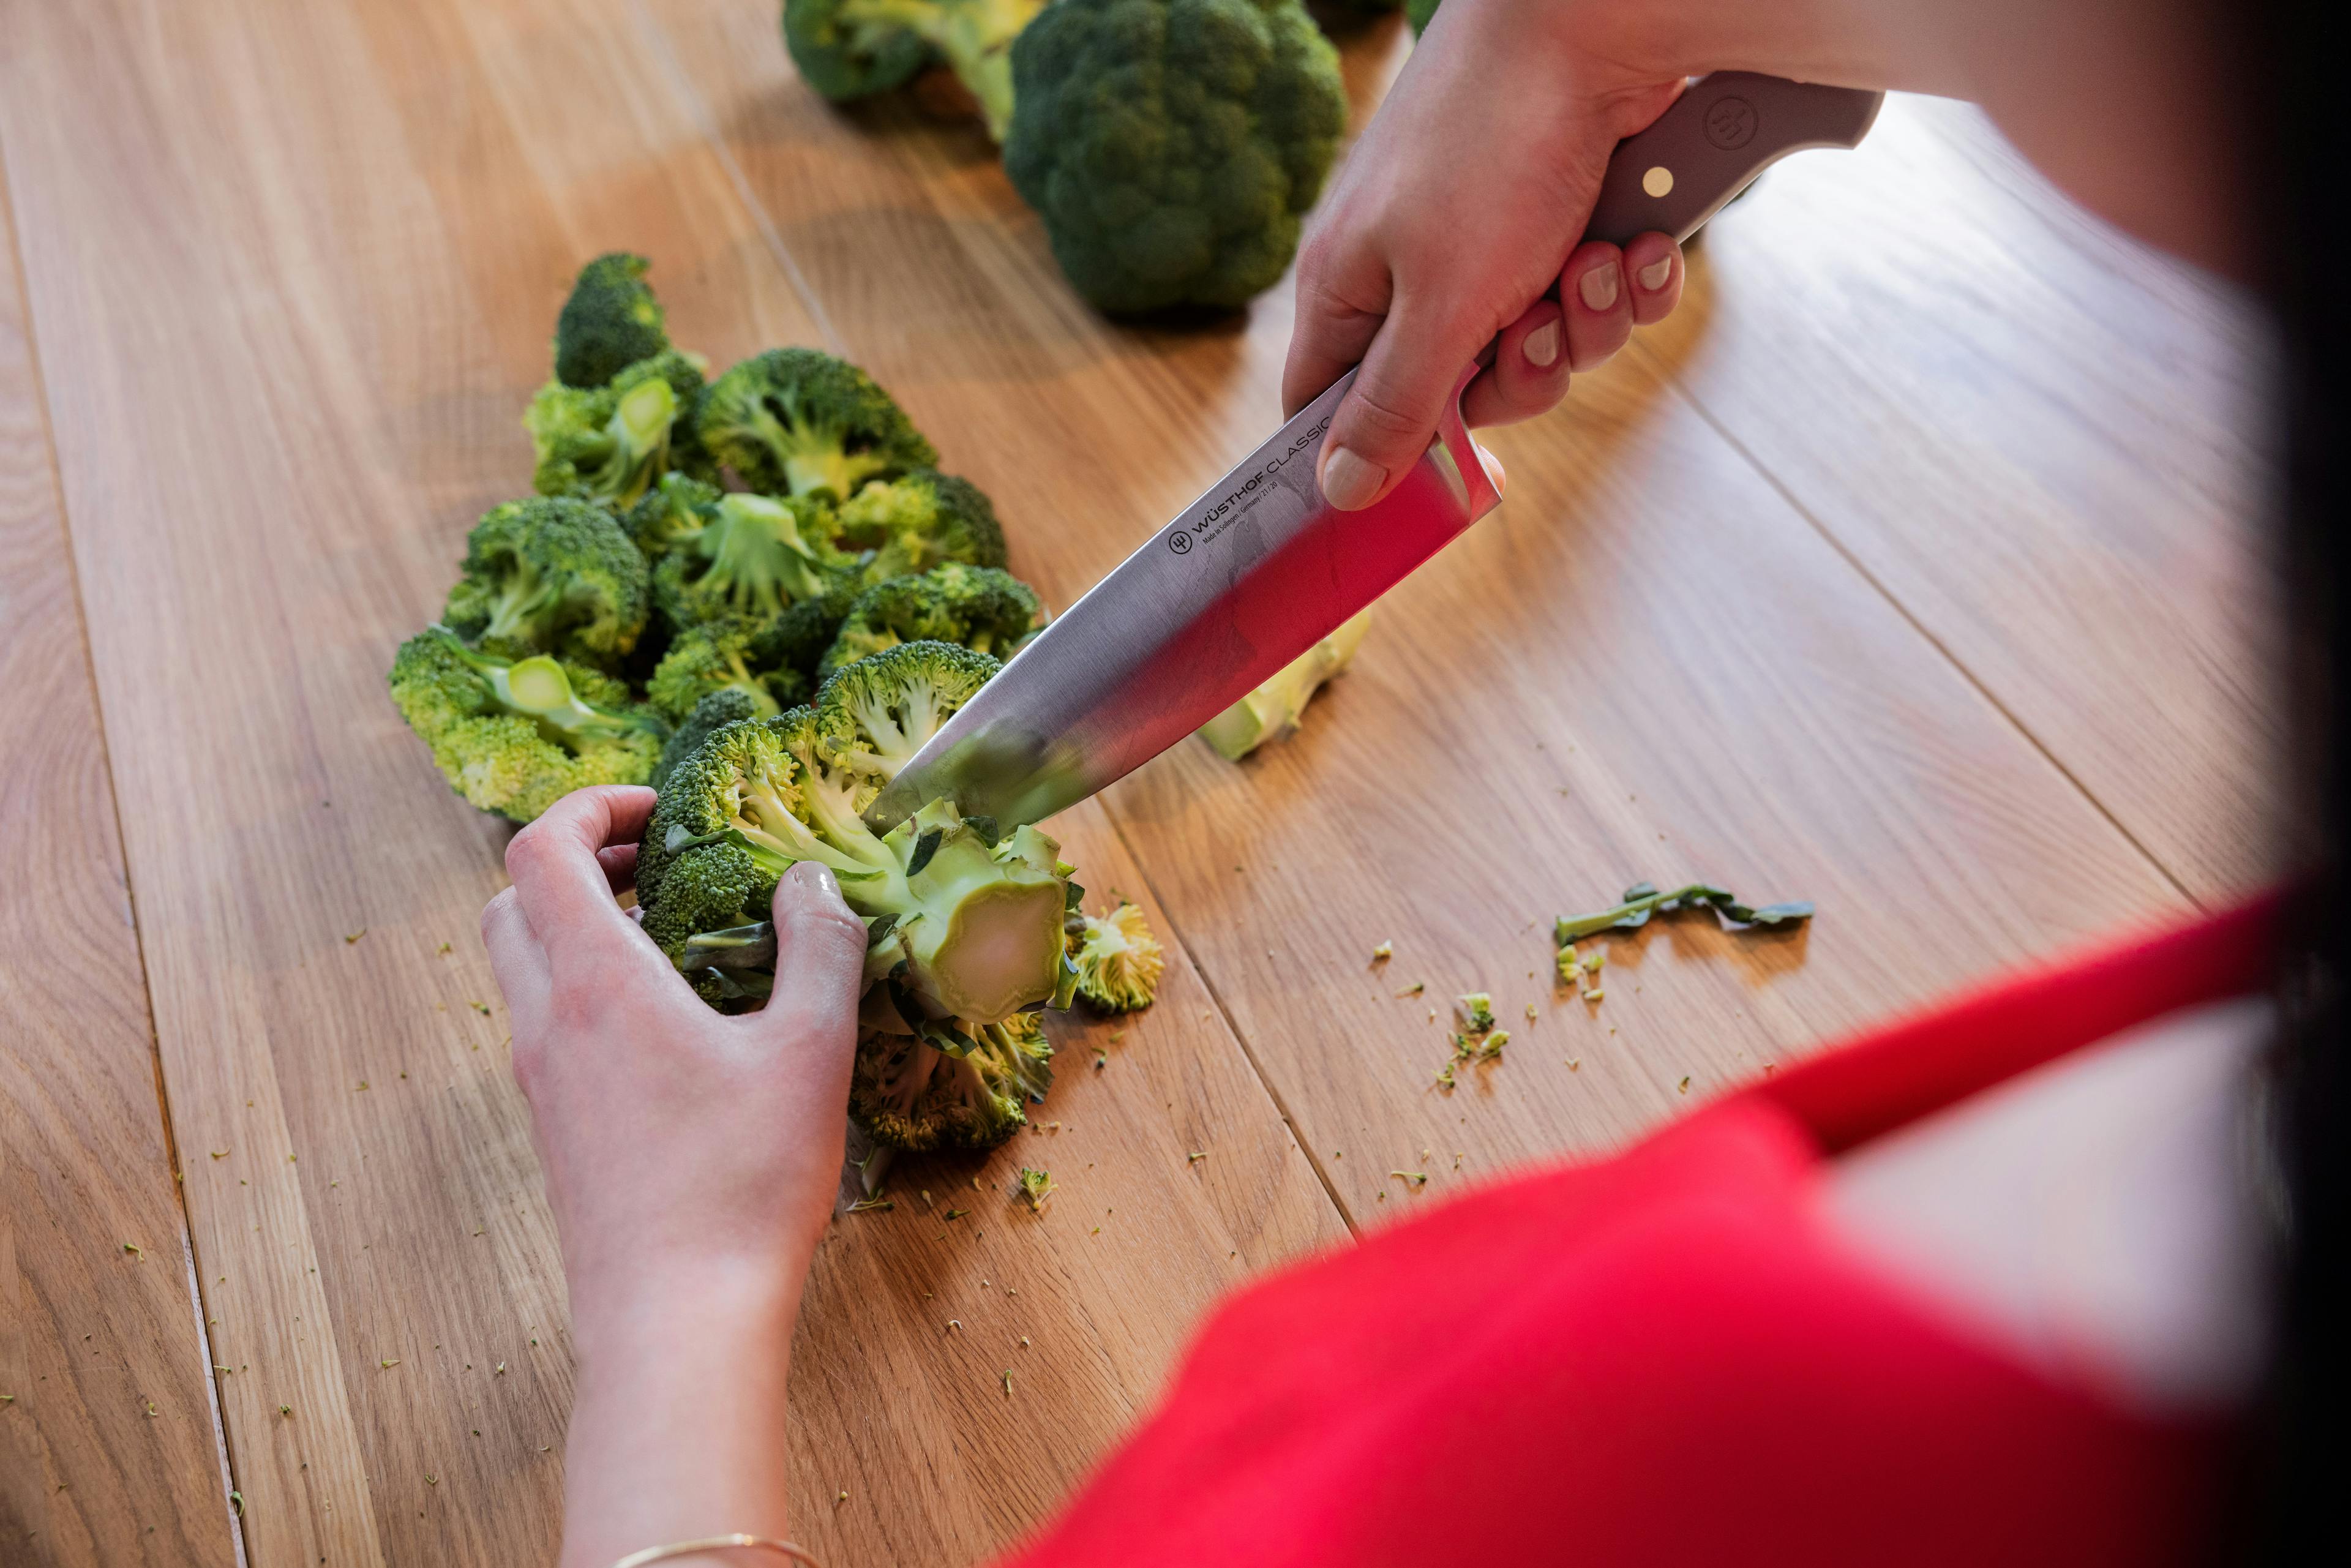 velvet oyster utility knife cutting broccoli